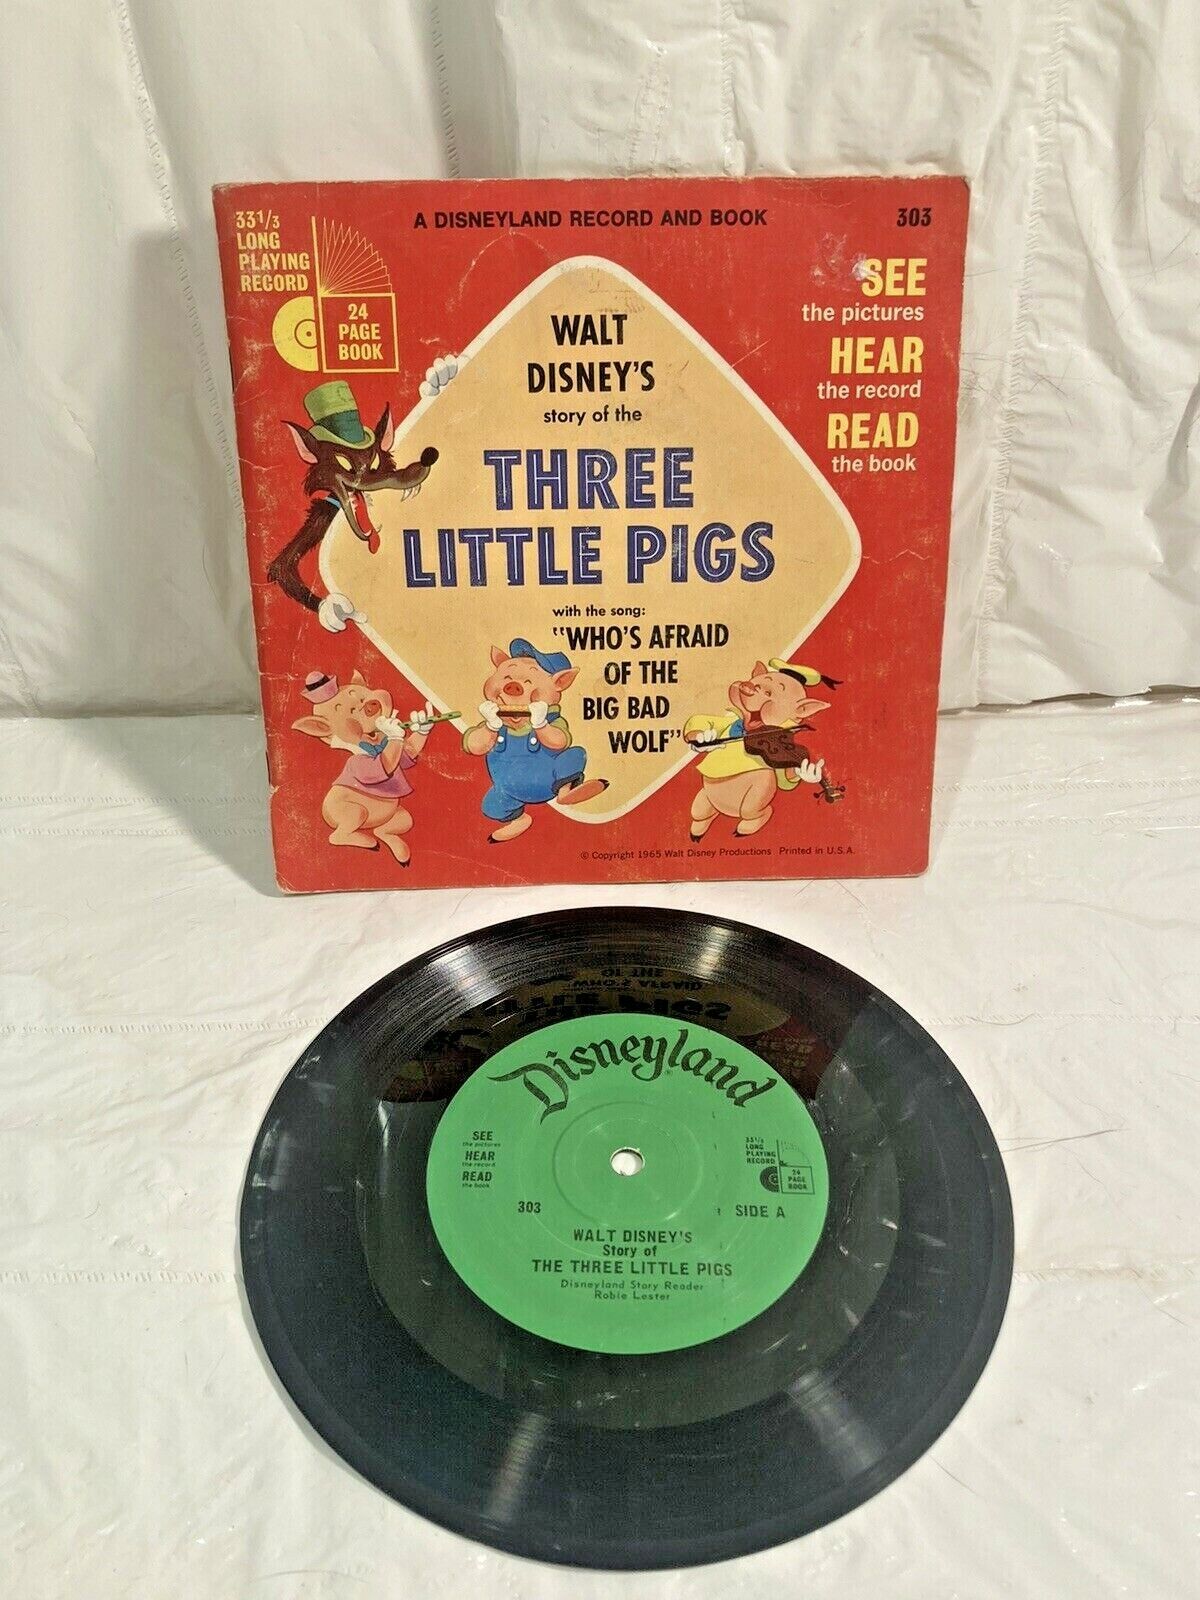 Vtg 1965 Walt Disney 33 1/3 Vinyl Record & Book  The Three Little Pigs #303